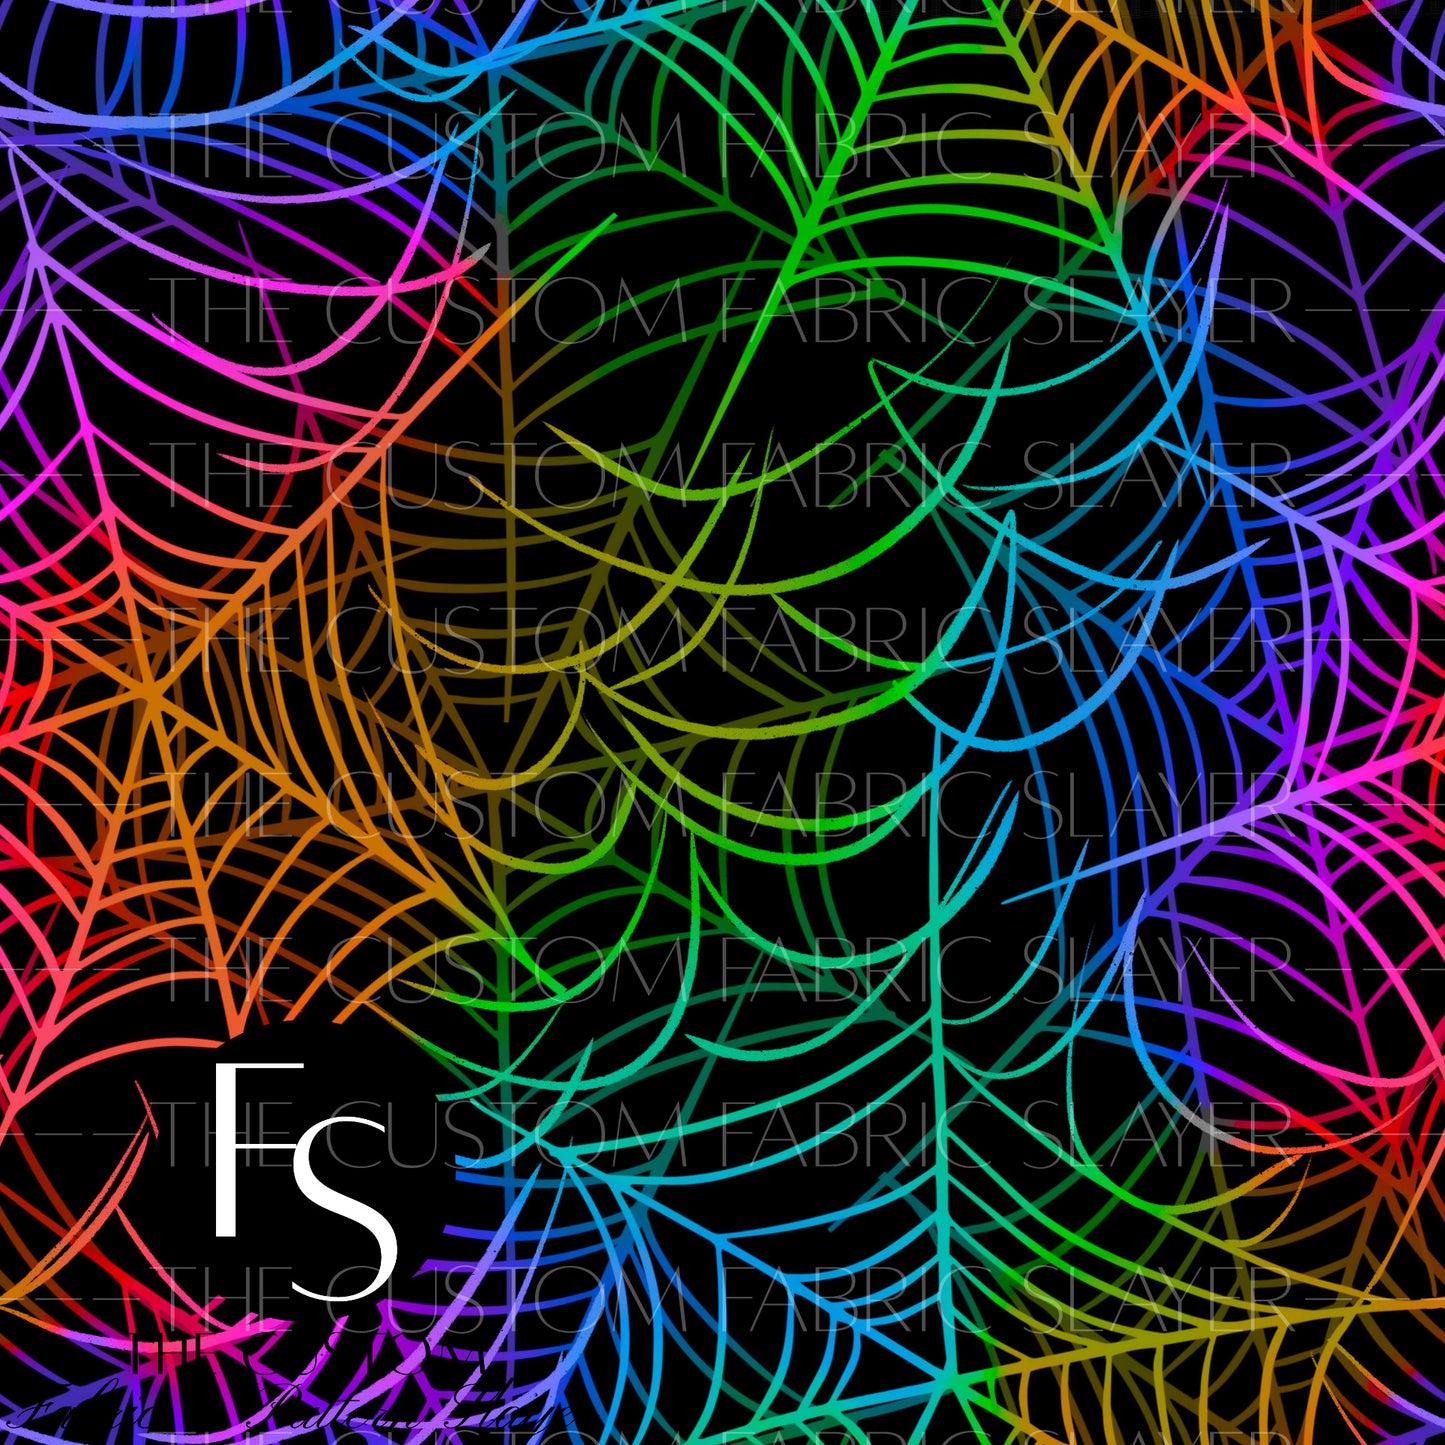 Rainbow Spider Webs - HEXREJECTSVAULT